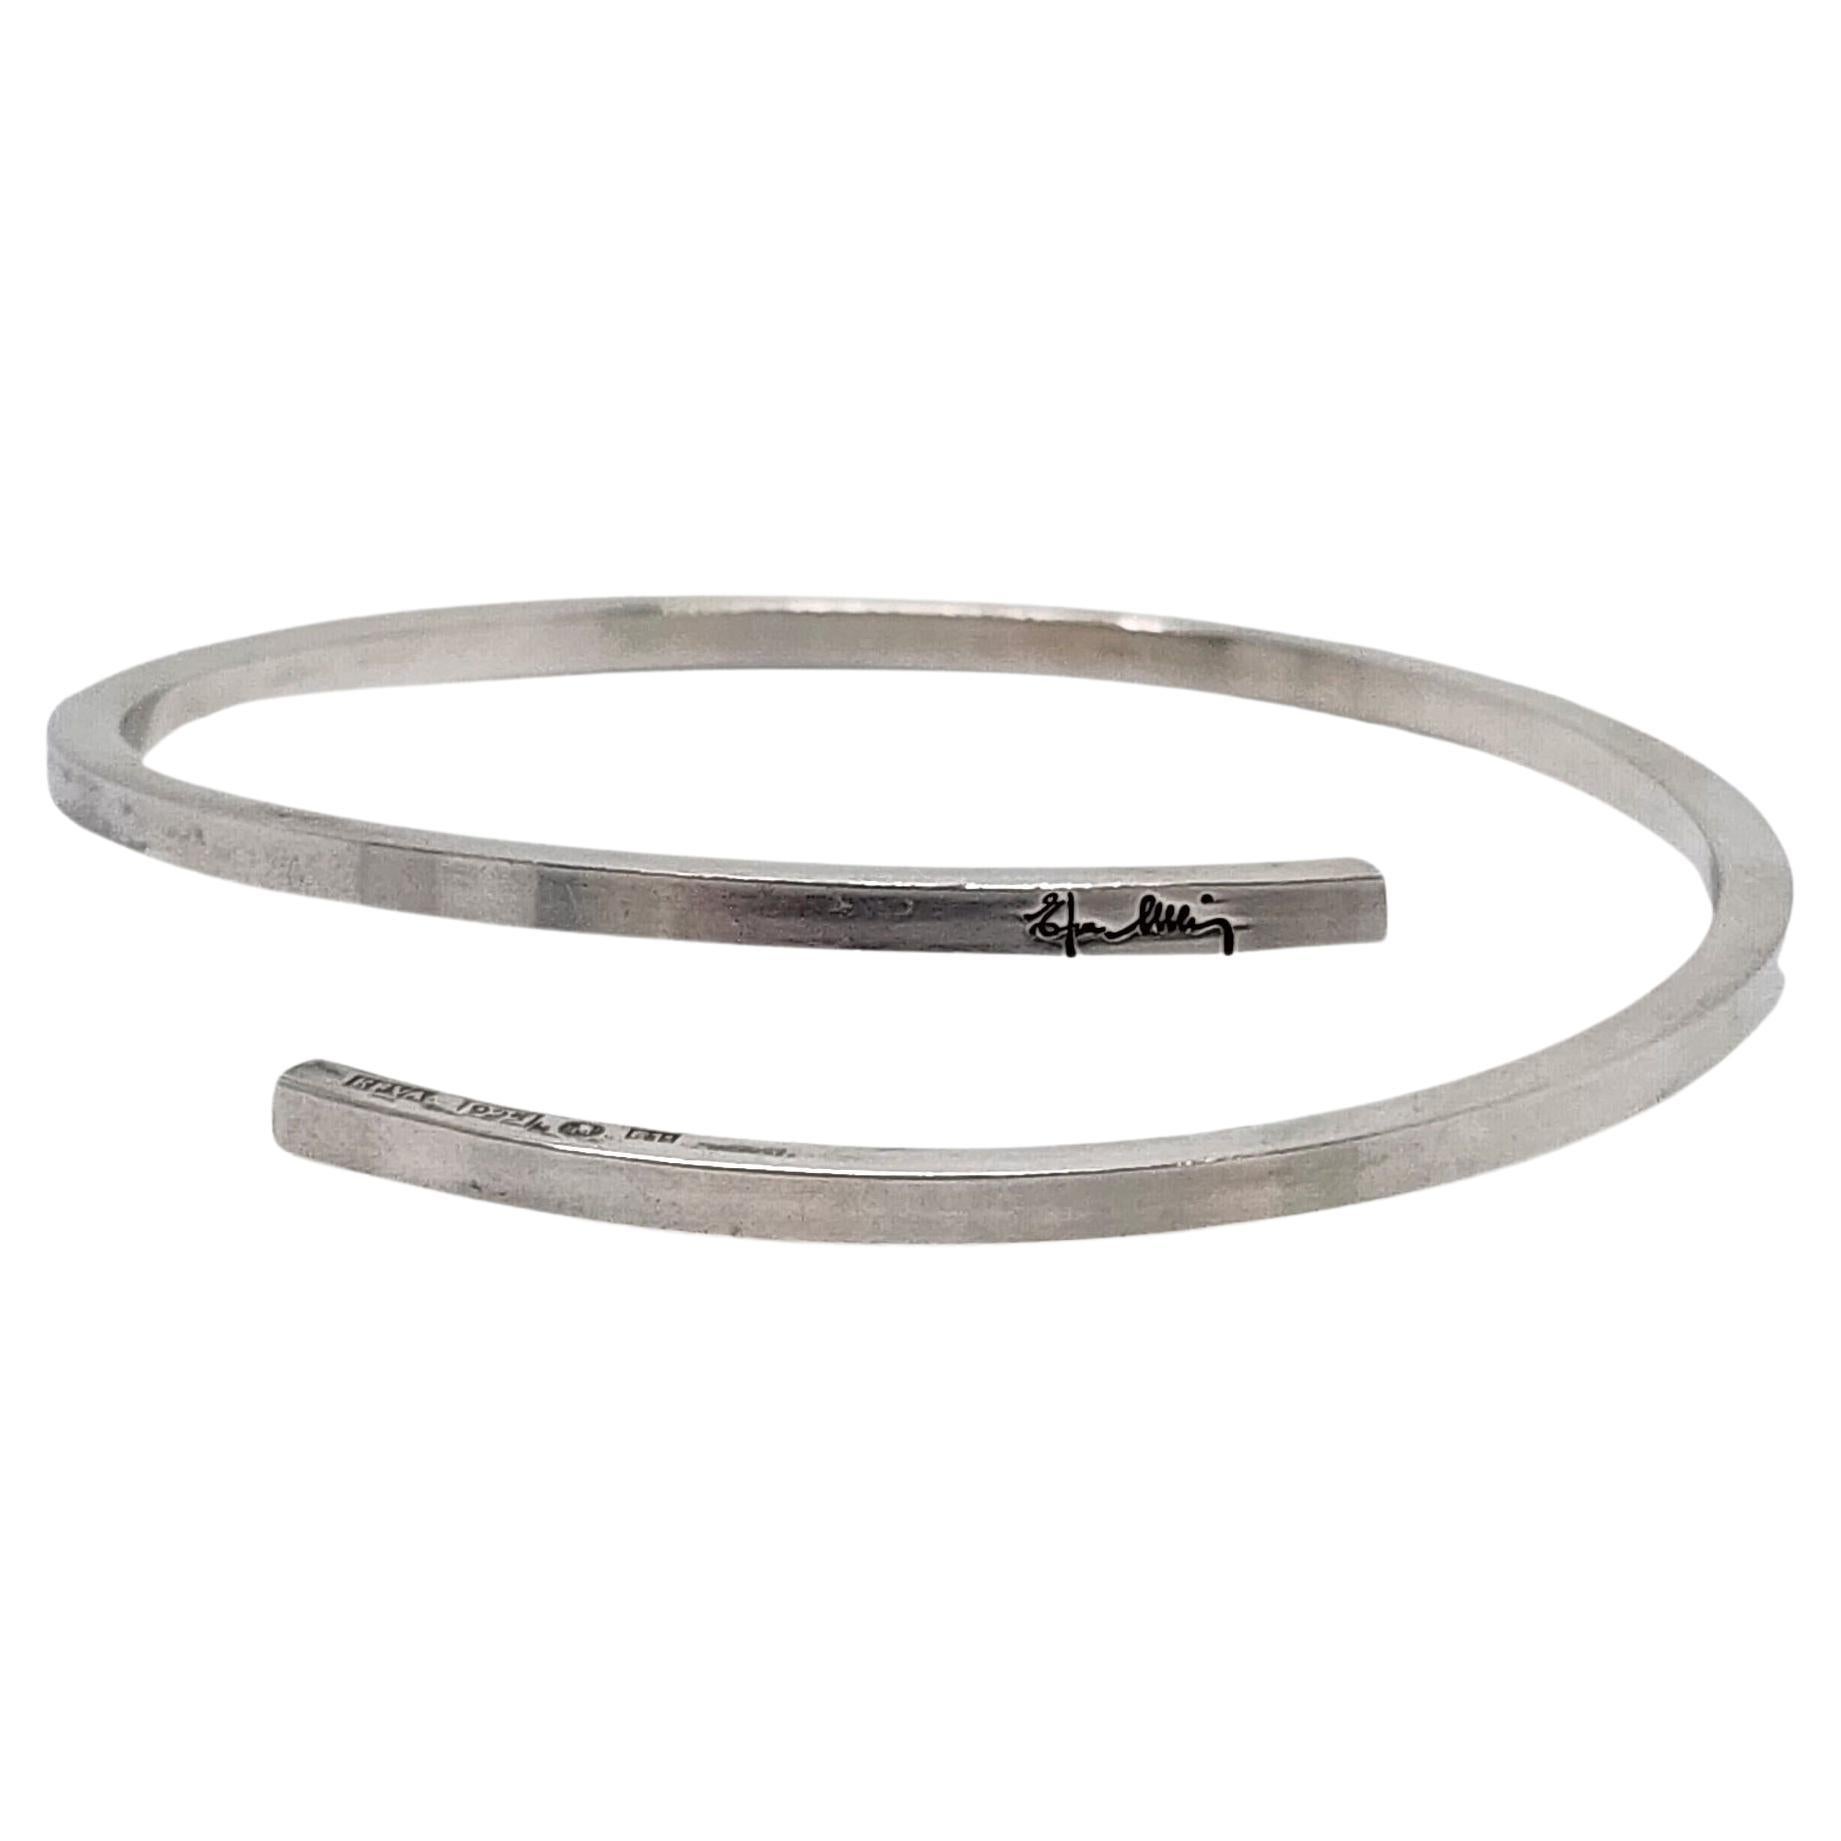 Efva Attling Stockholm Sterling Silver Twist Around Cuff Bracelet #16439 For Sale